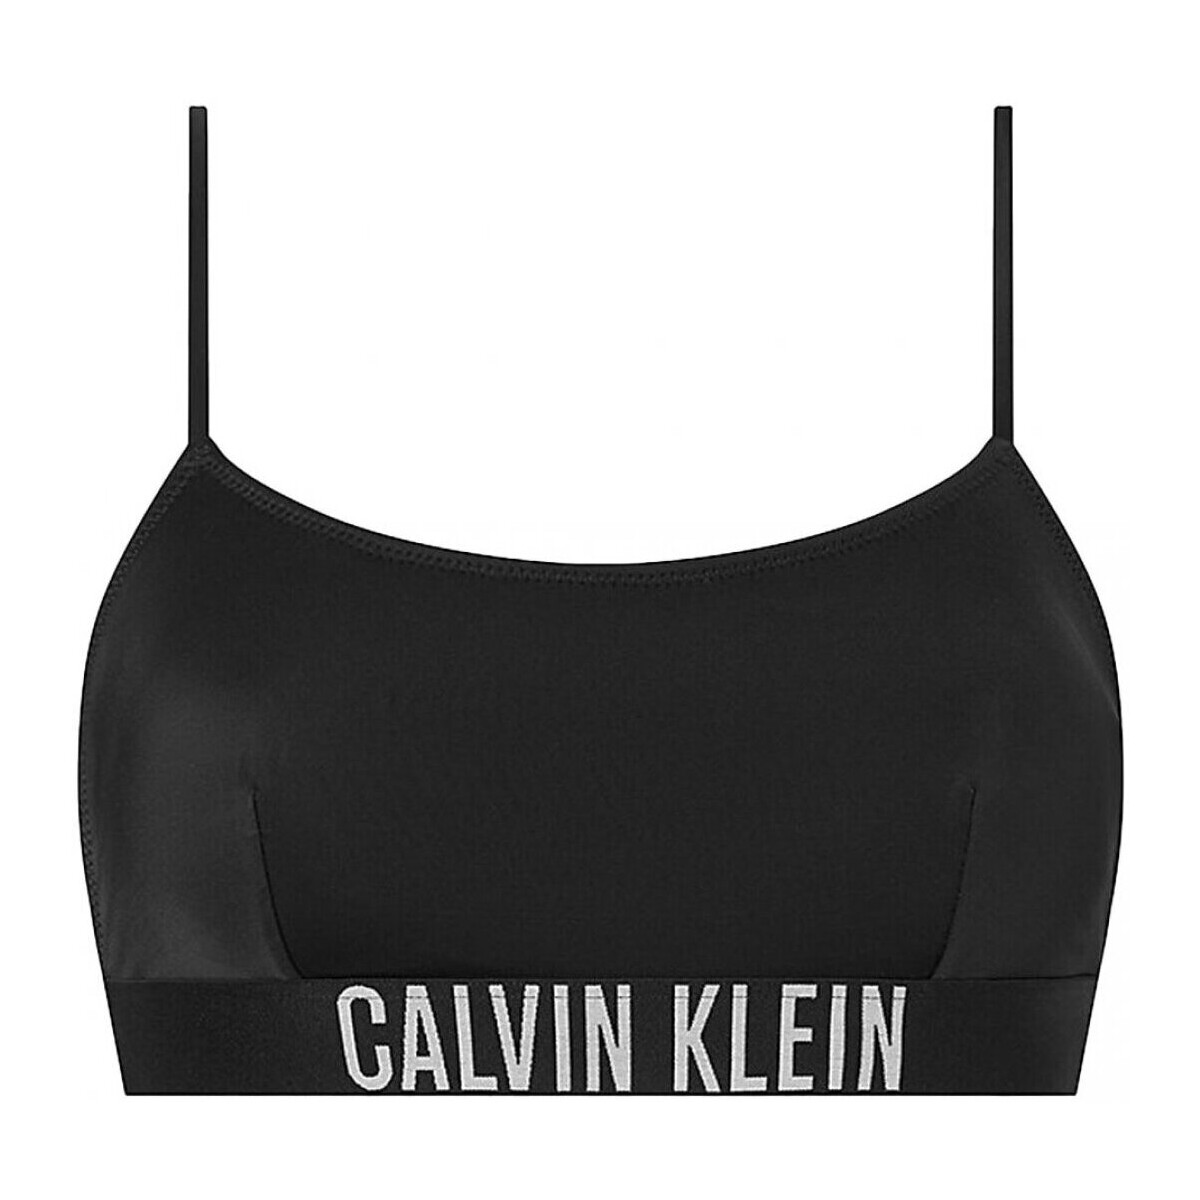 Rintaliivit Calvin Klein Jeans KW0KW01851 EU S